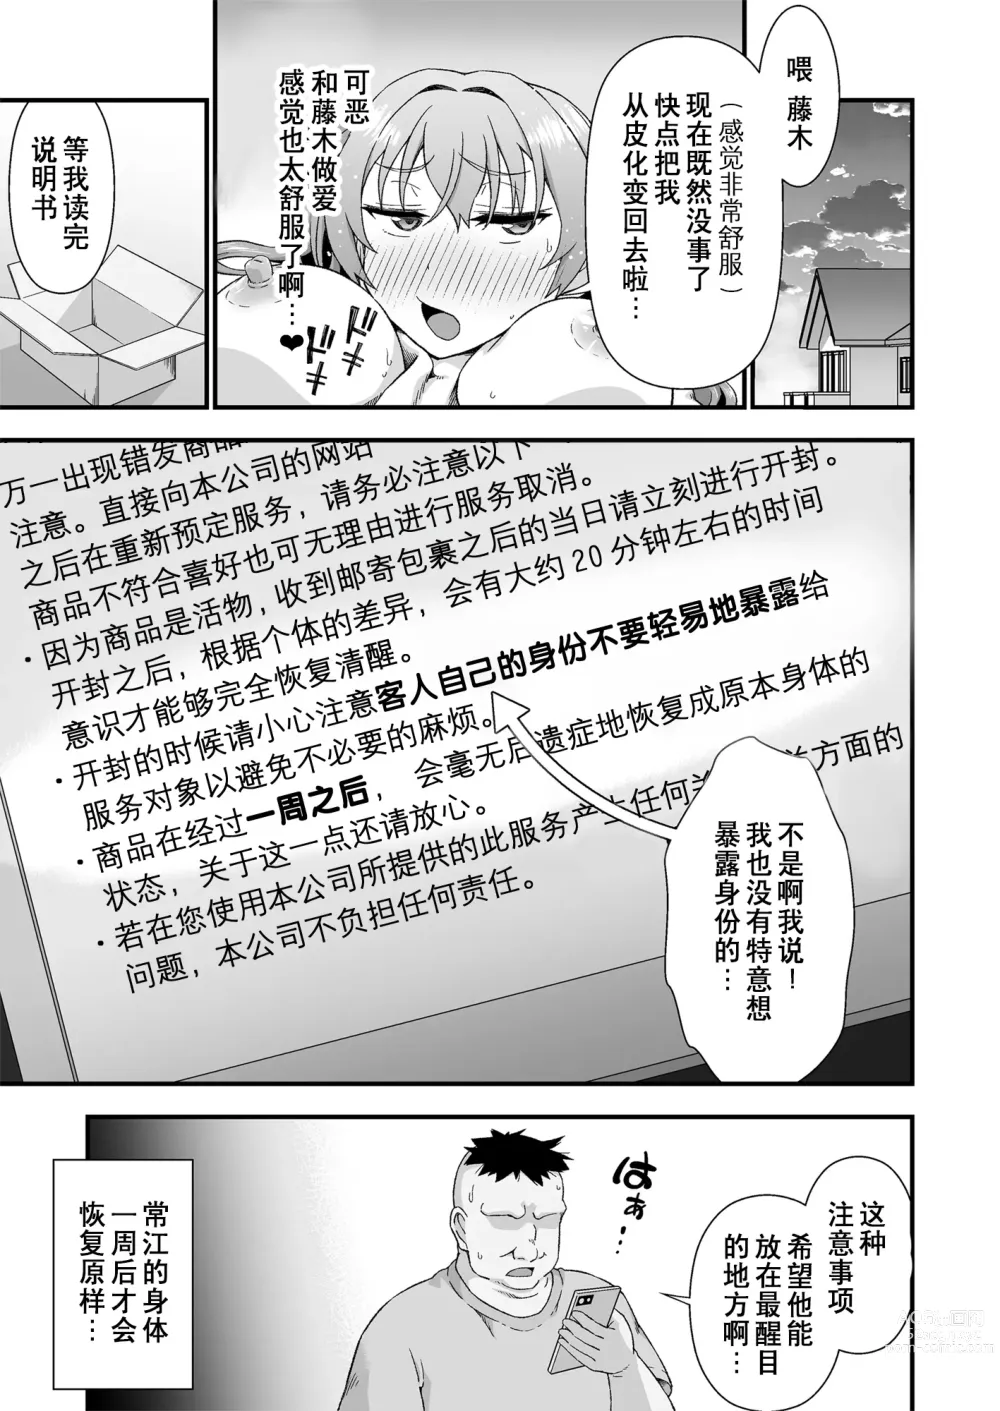 Page 4 of doujinshi Kawa-ka Daiko o kawari